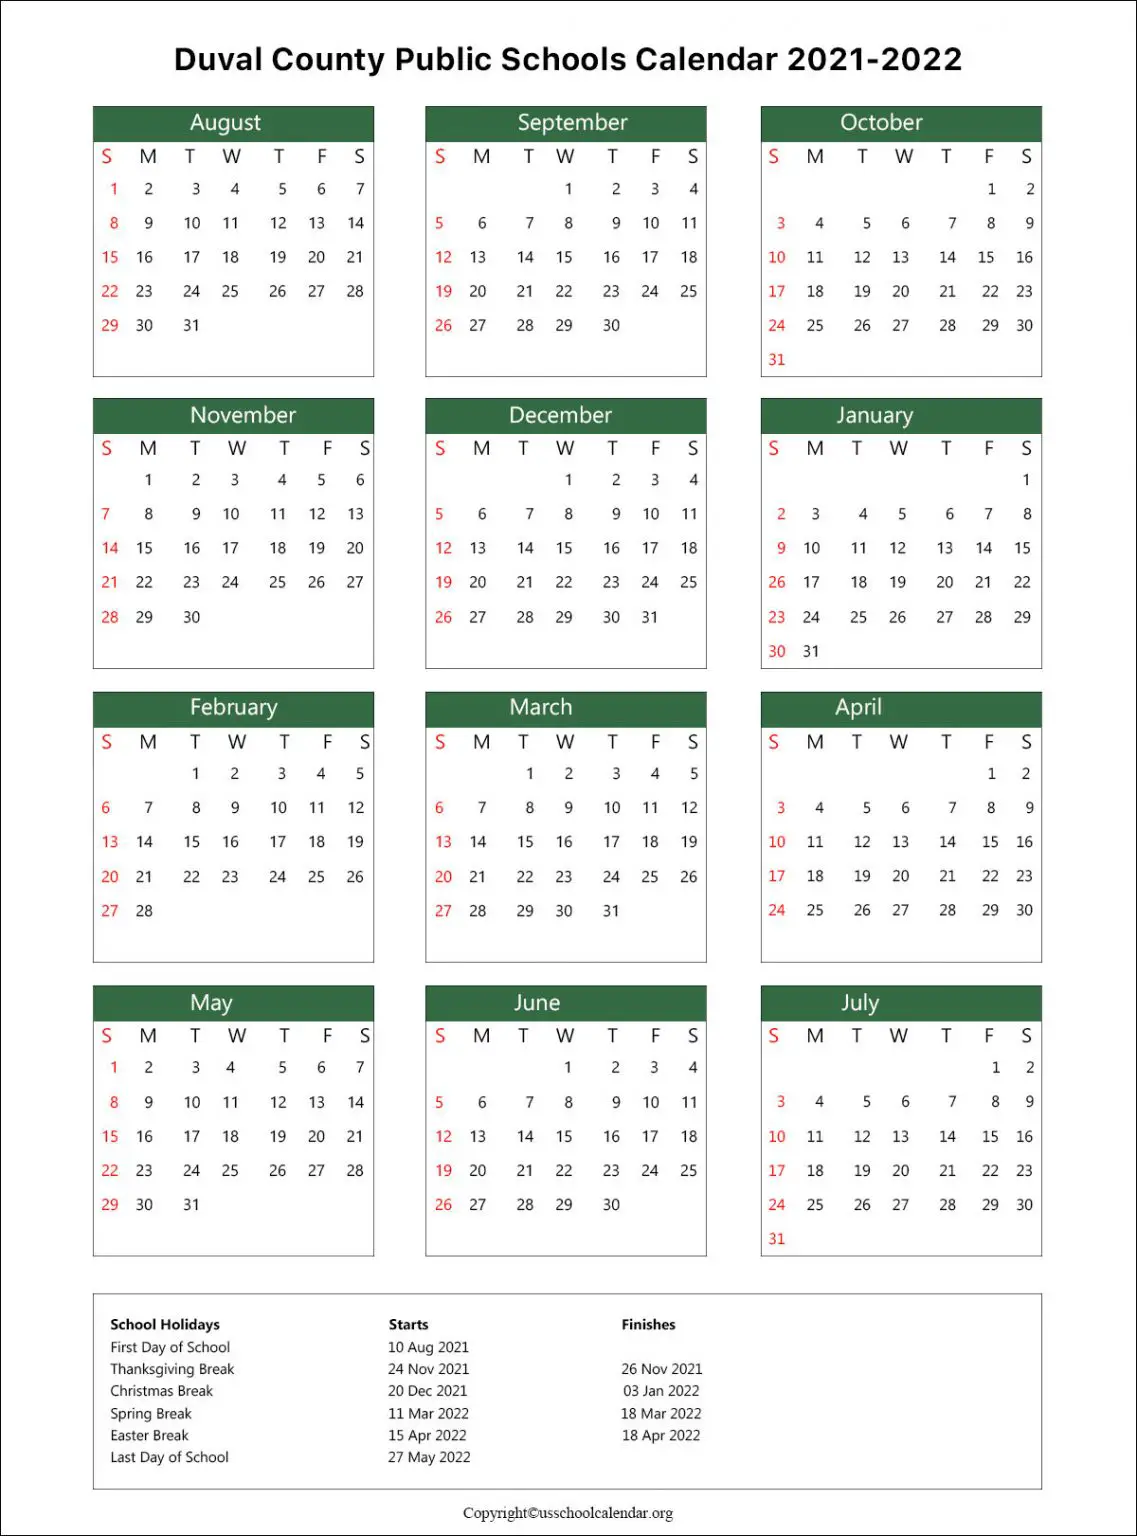 duval-county-school-calendar-with-holidays-2021-2022